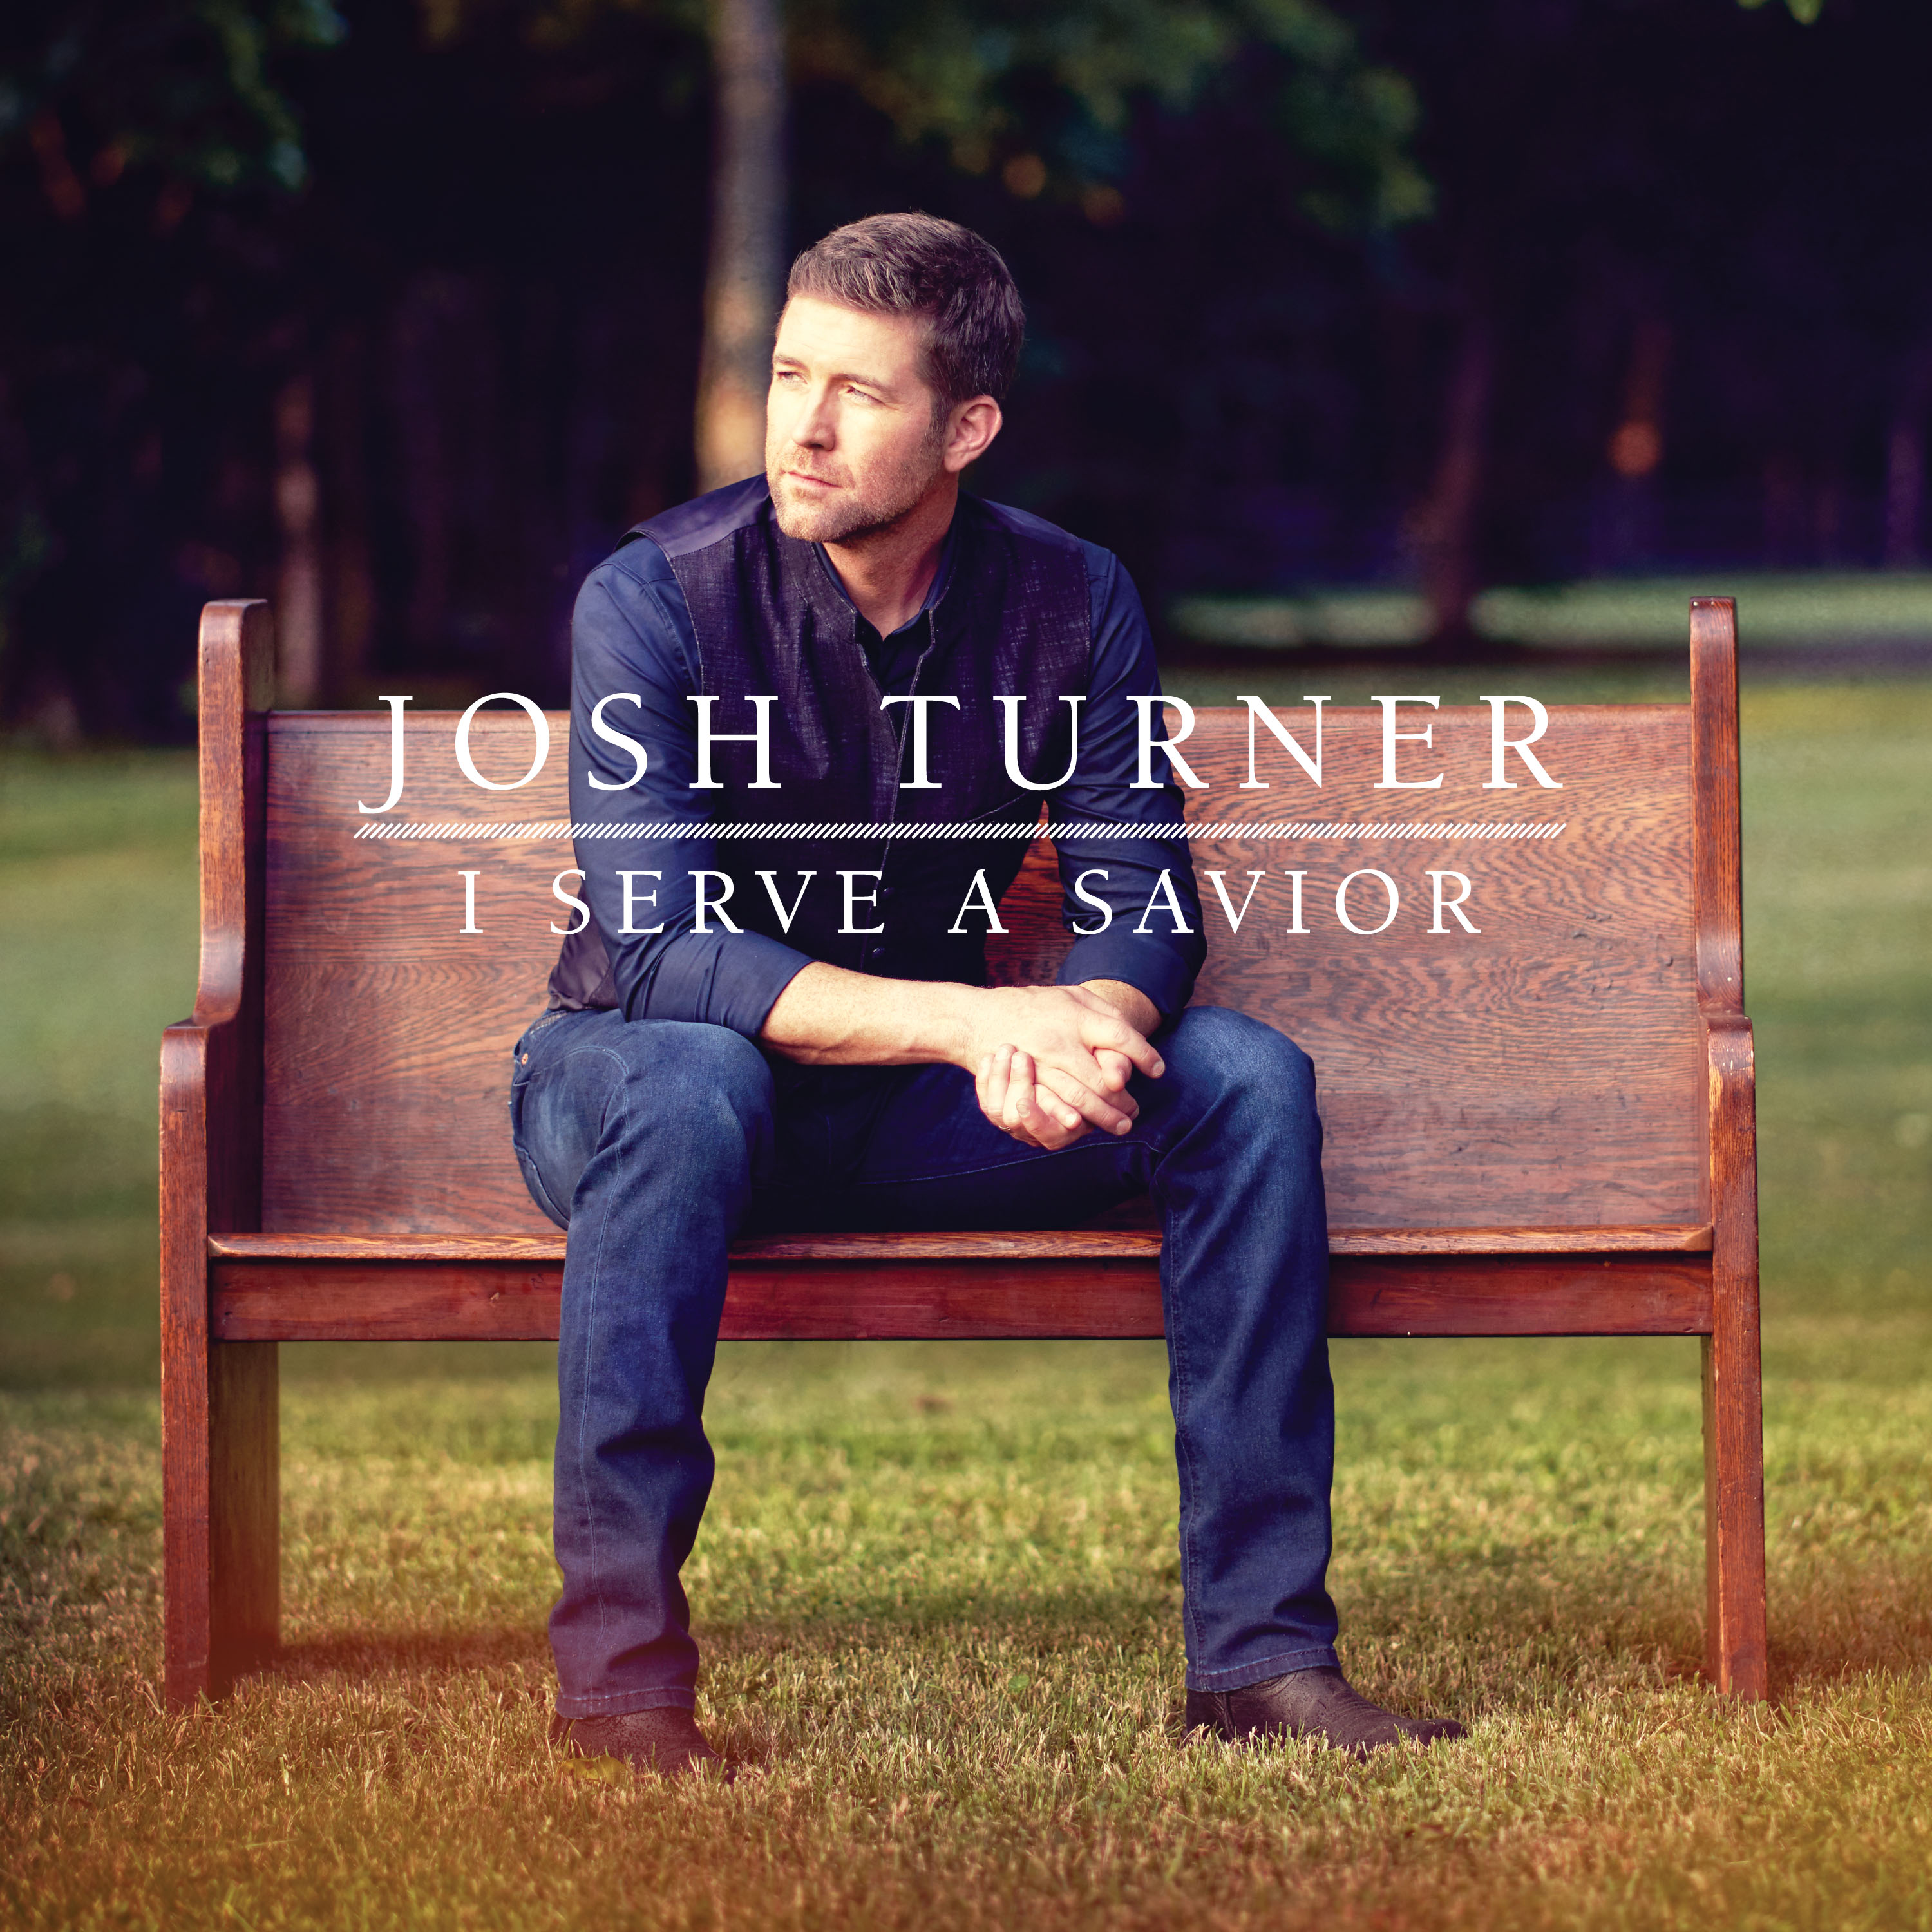 Josh Turner Goes Gospel With New Album ‘I Serve A Savior’ – Review